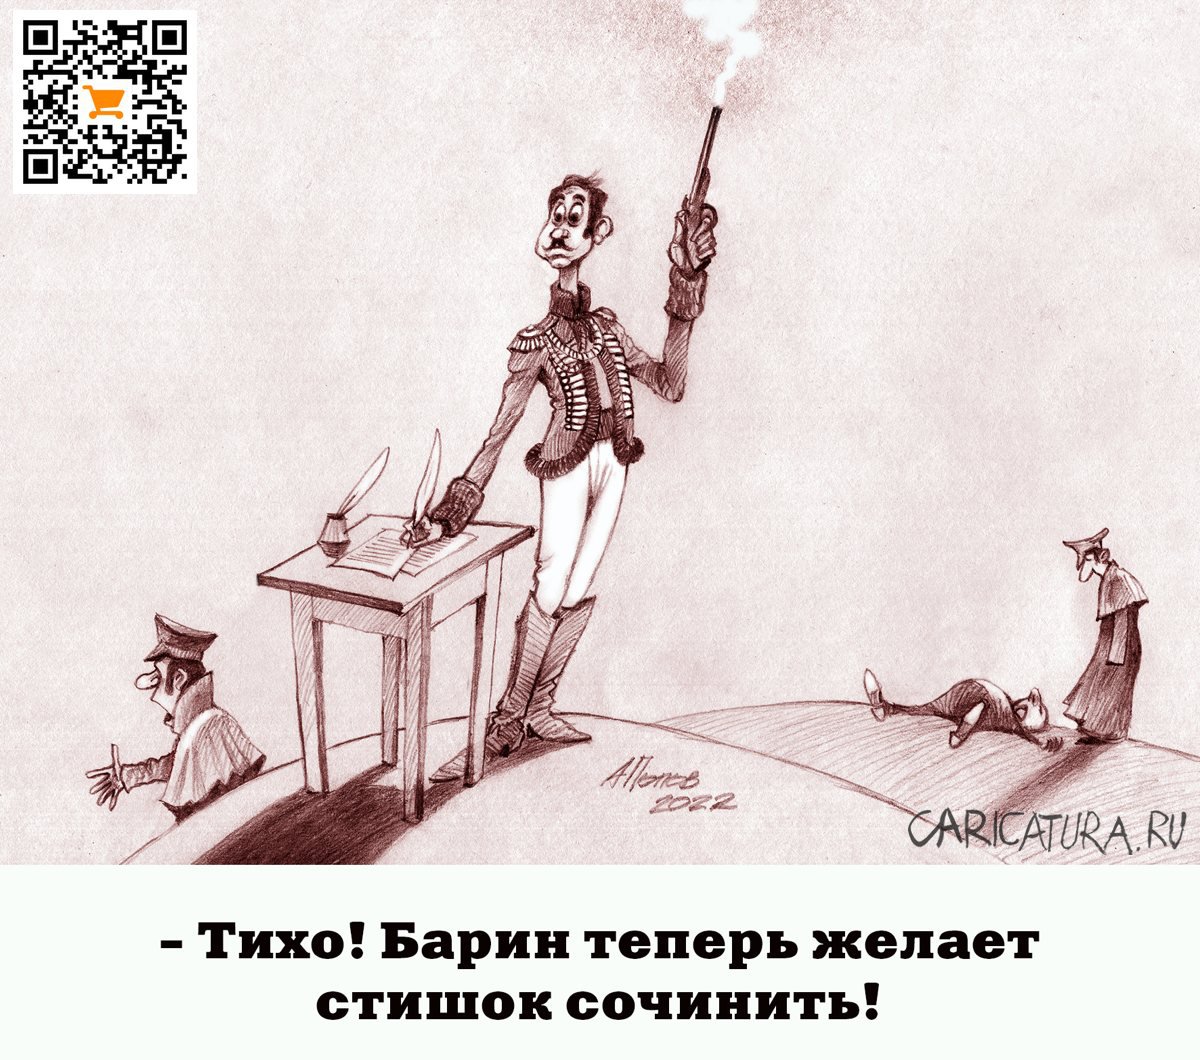 Карикатура "На стихи поэта Лермонтова", Александр Попов